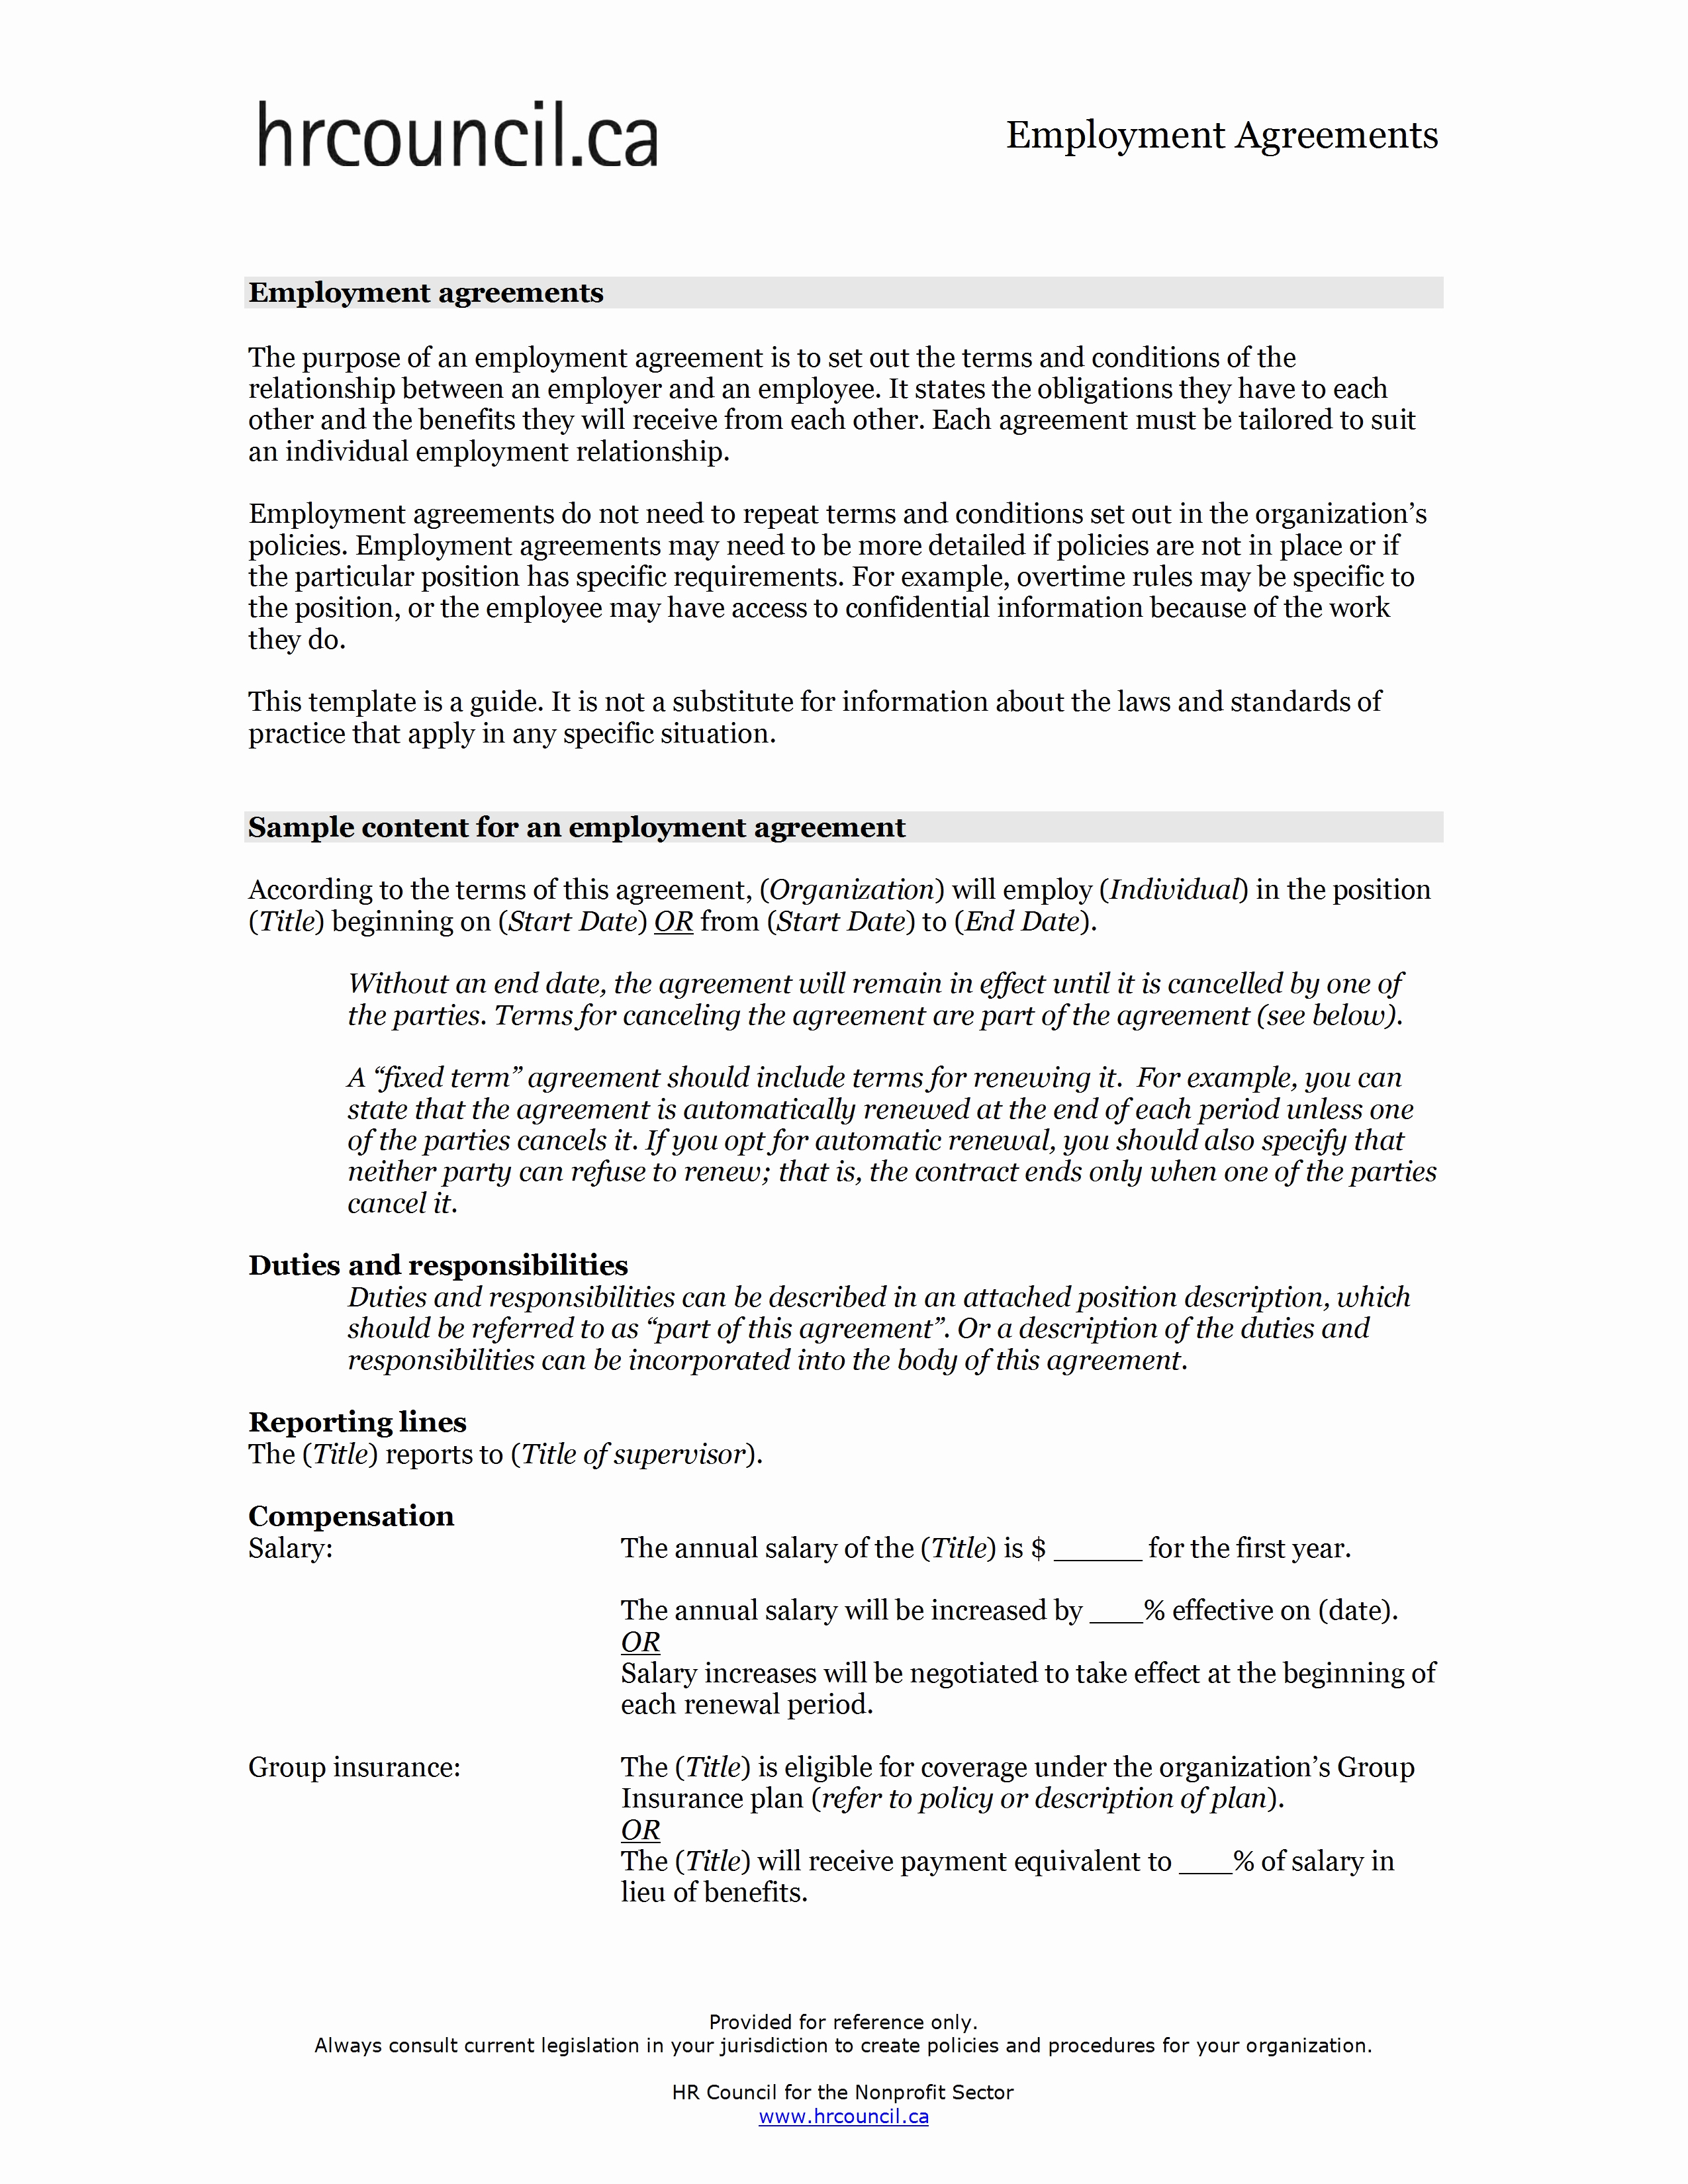 Employment Contract Template Word Inspirational Employment Agreement Template